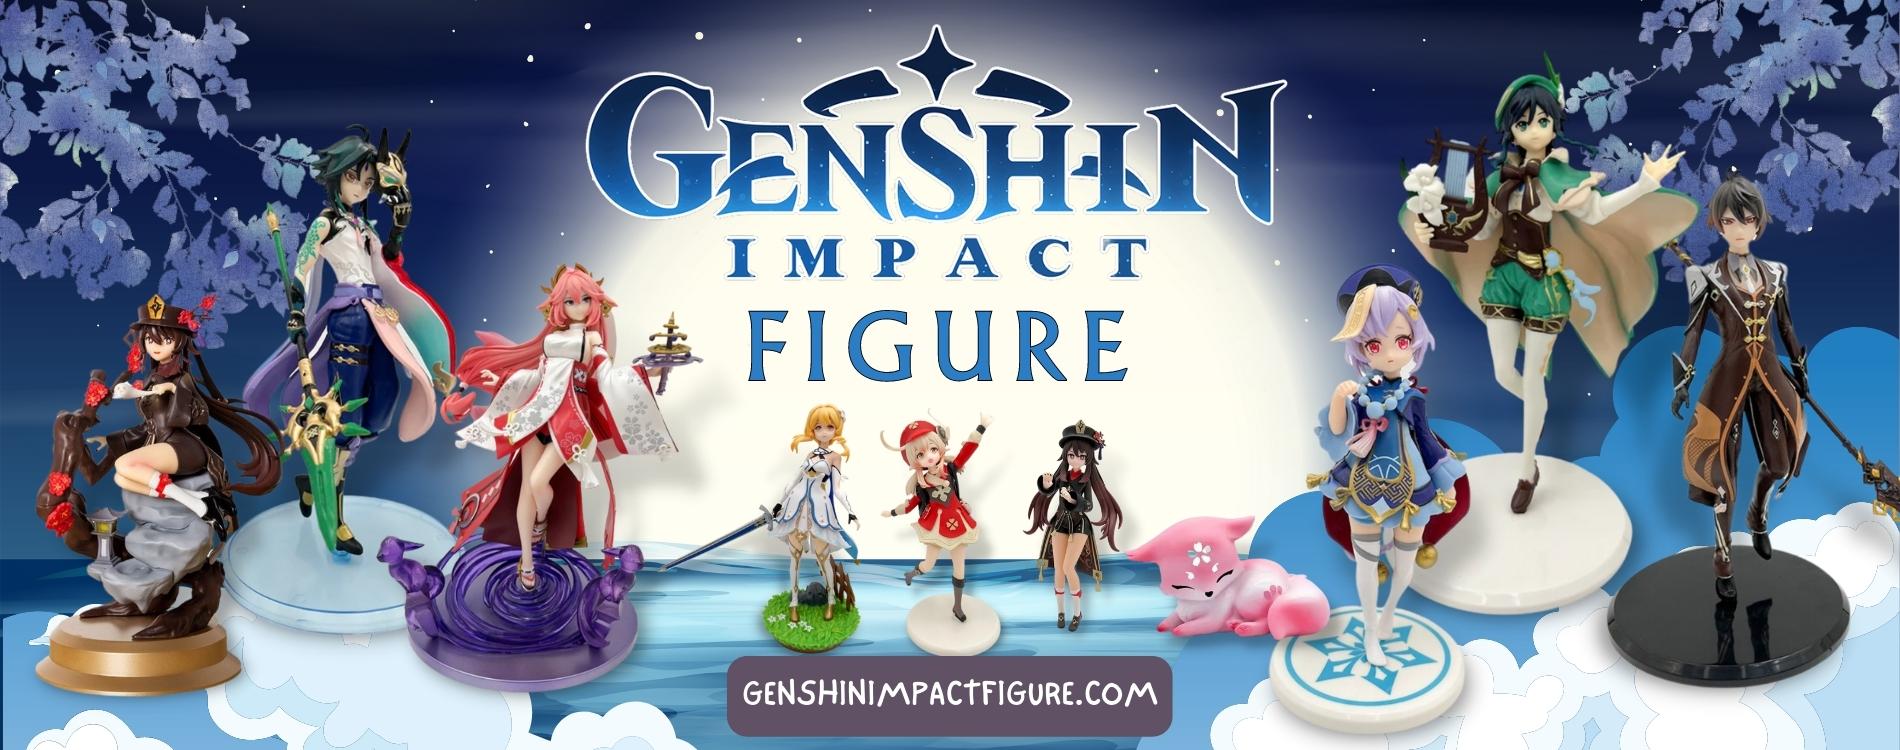 Genshin Impact figure banner